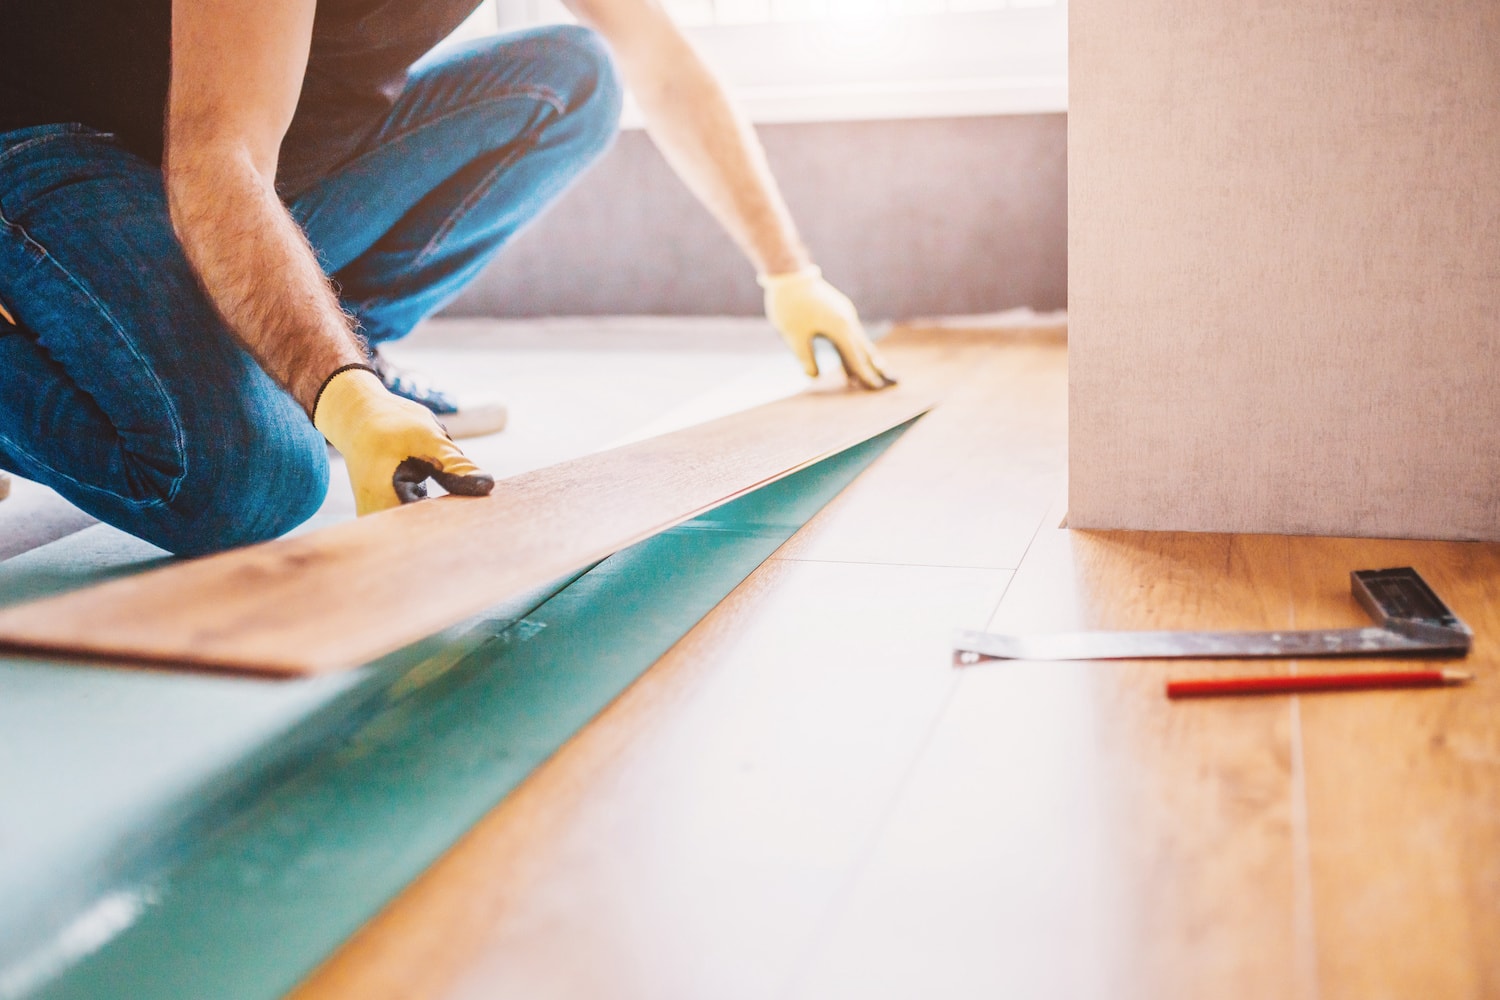 Man at home laying laminate flooring - finishing home remodeling